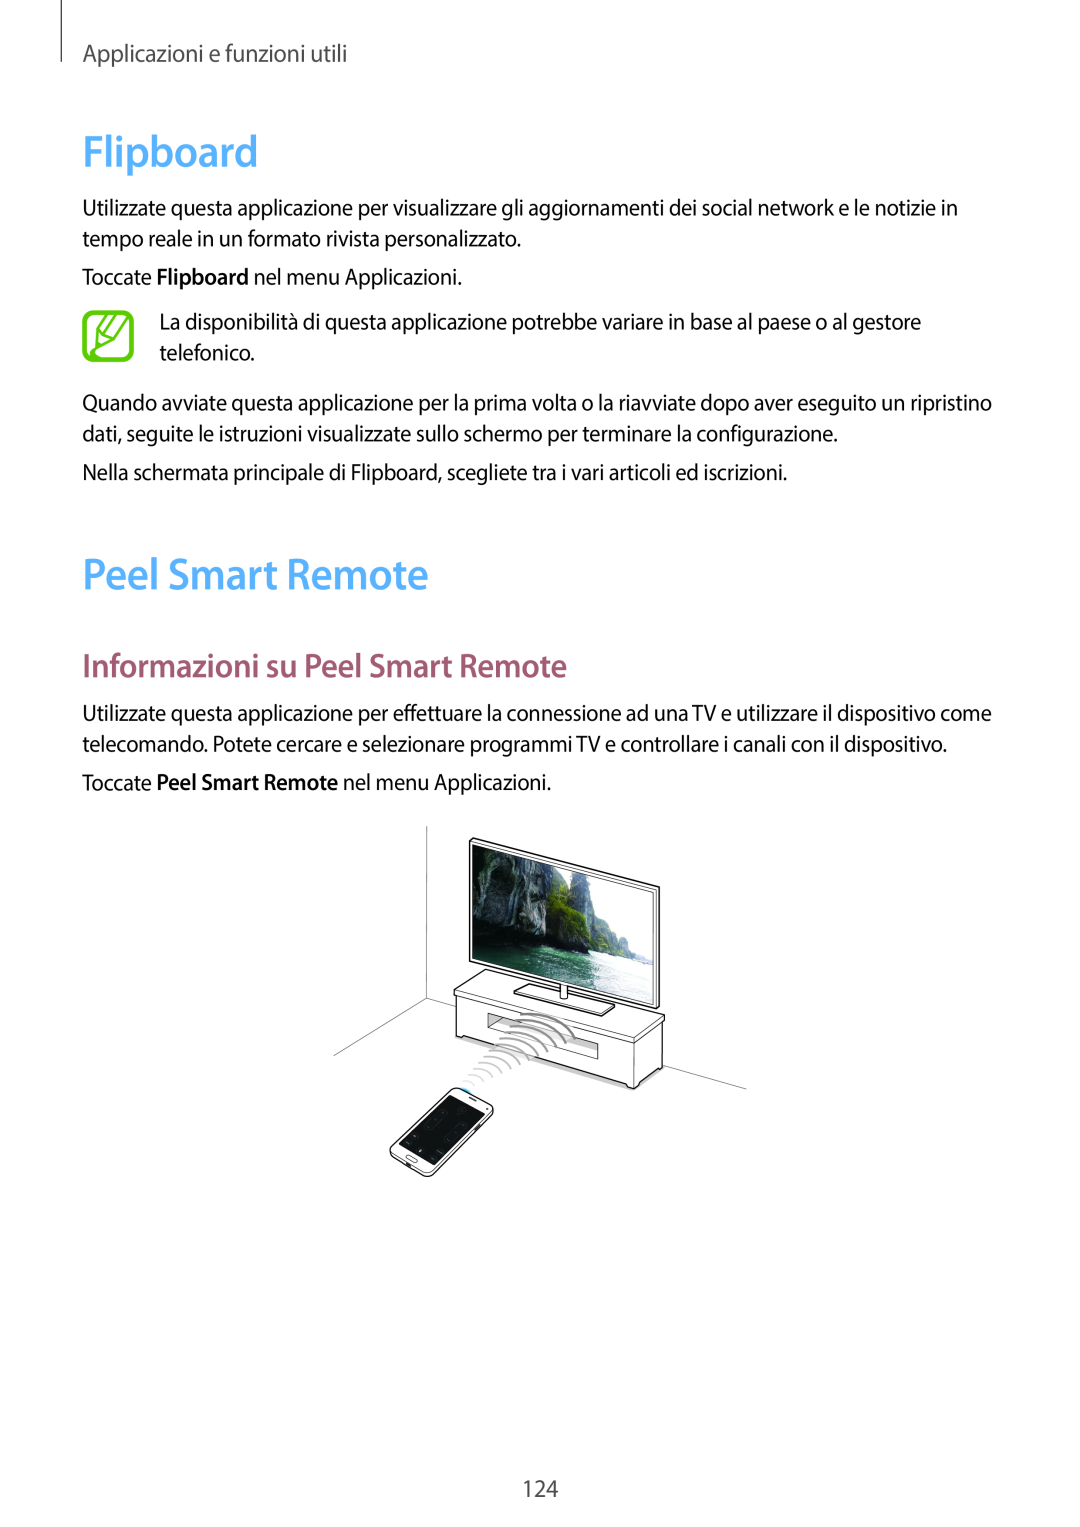 Samsung SM-G800FZDAAUT, SM-G800FZWADBT Flipboard, Informazioni su Peel Smart Remote, Applicazioni e funzioni utili 